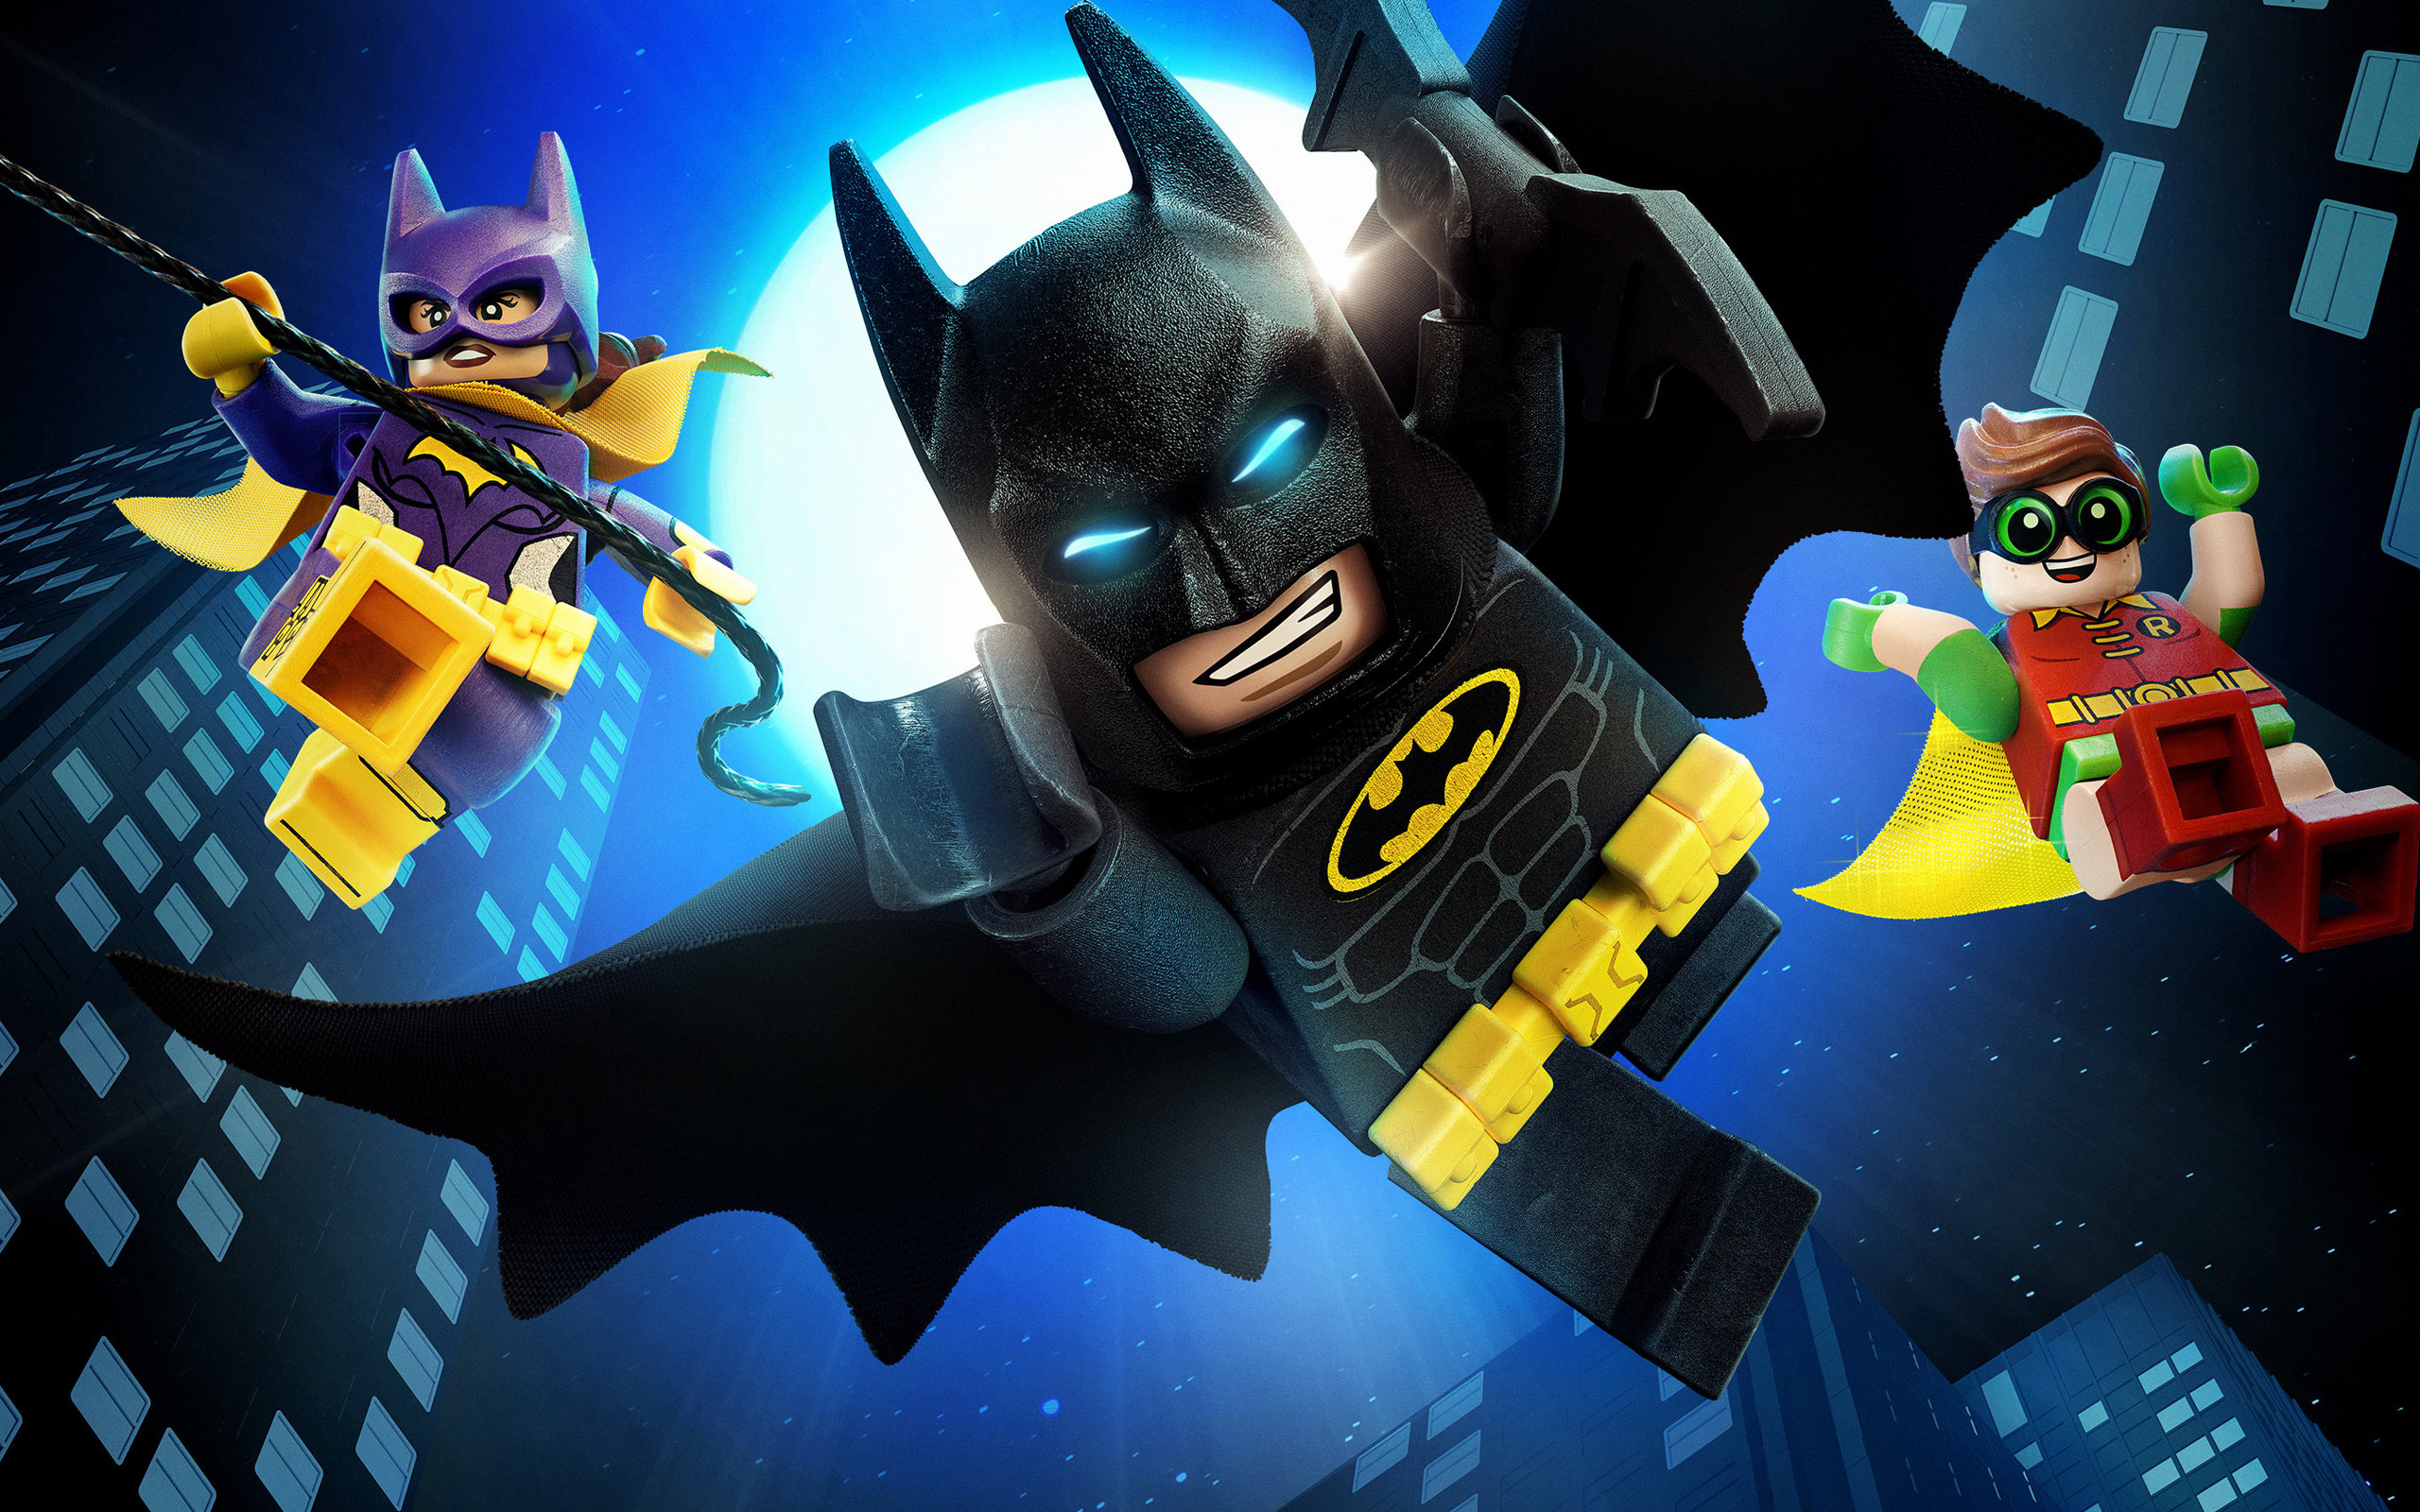 HD The LEGO Batman Movie wallpaper | The LEGO Batman Movie wallpapers hd |  Pinterest | Lego batman movie, Lego batman and Movie wallpapers